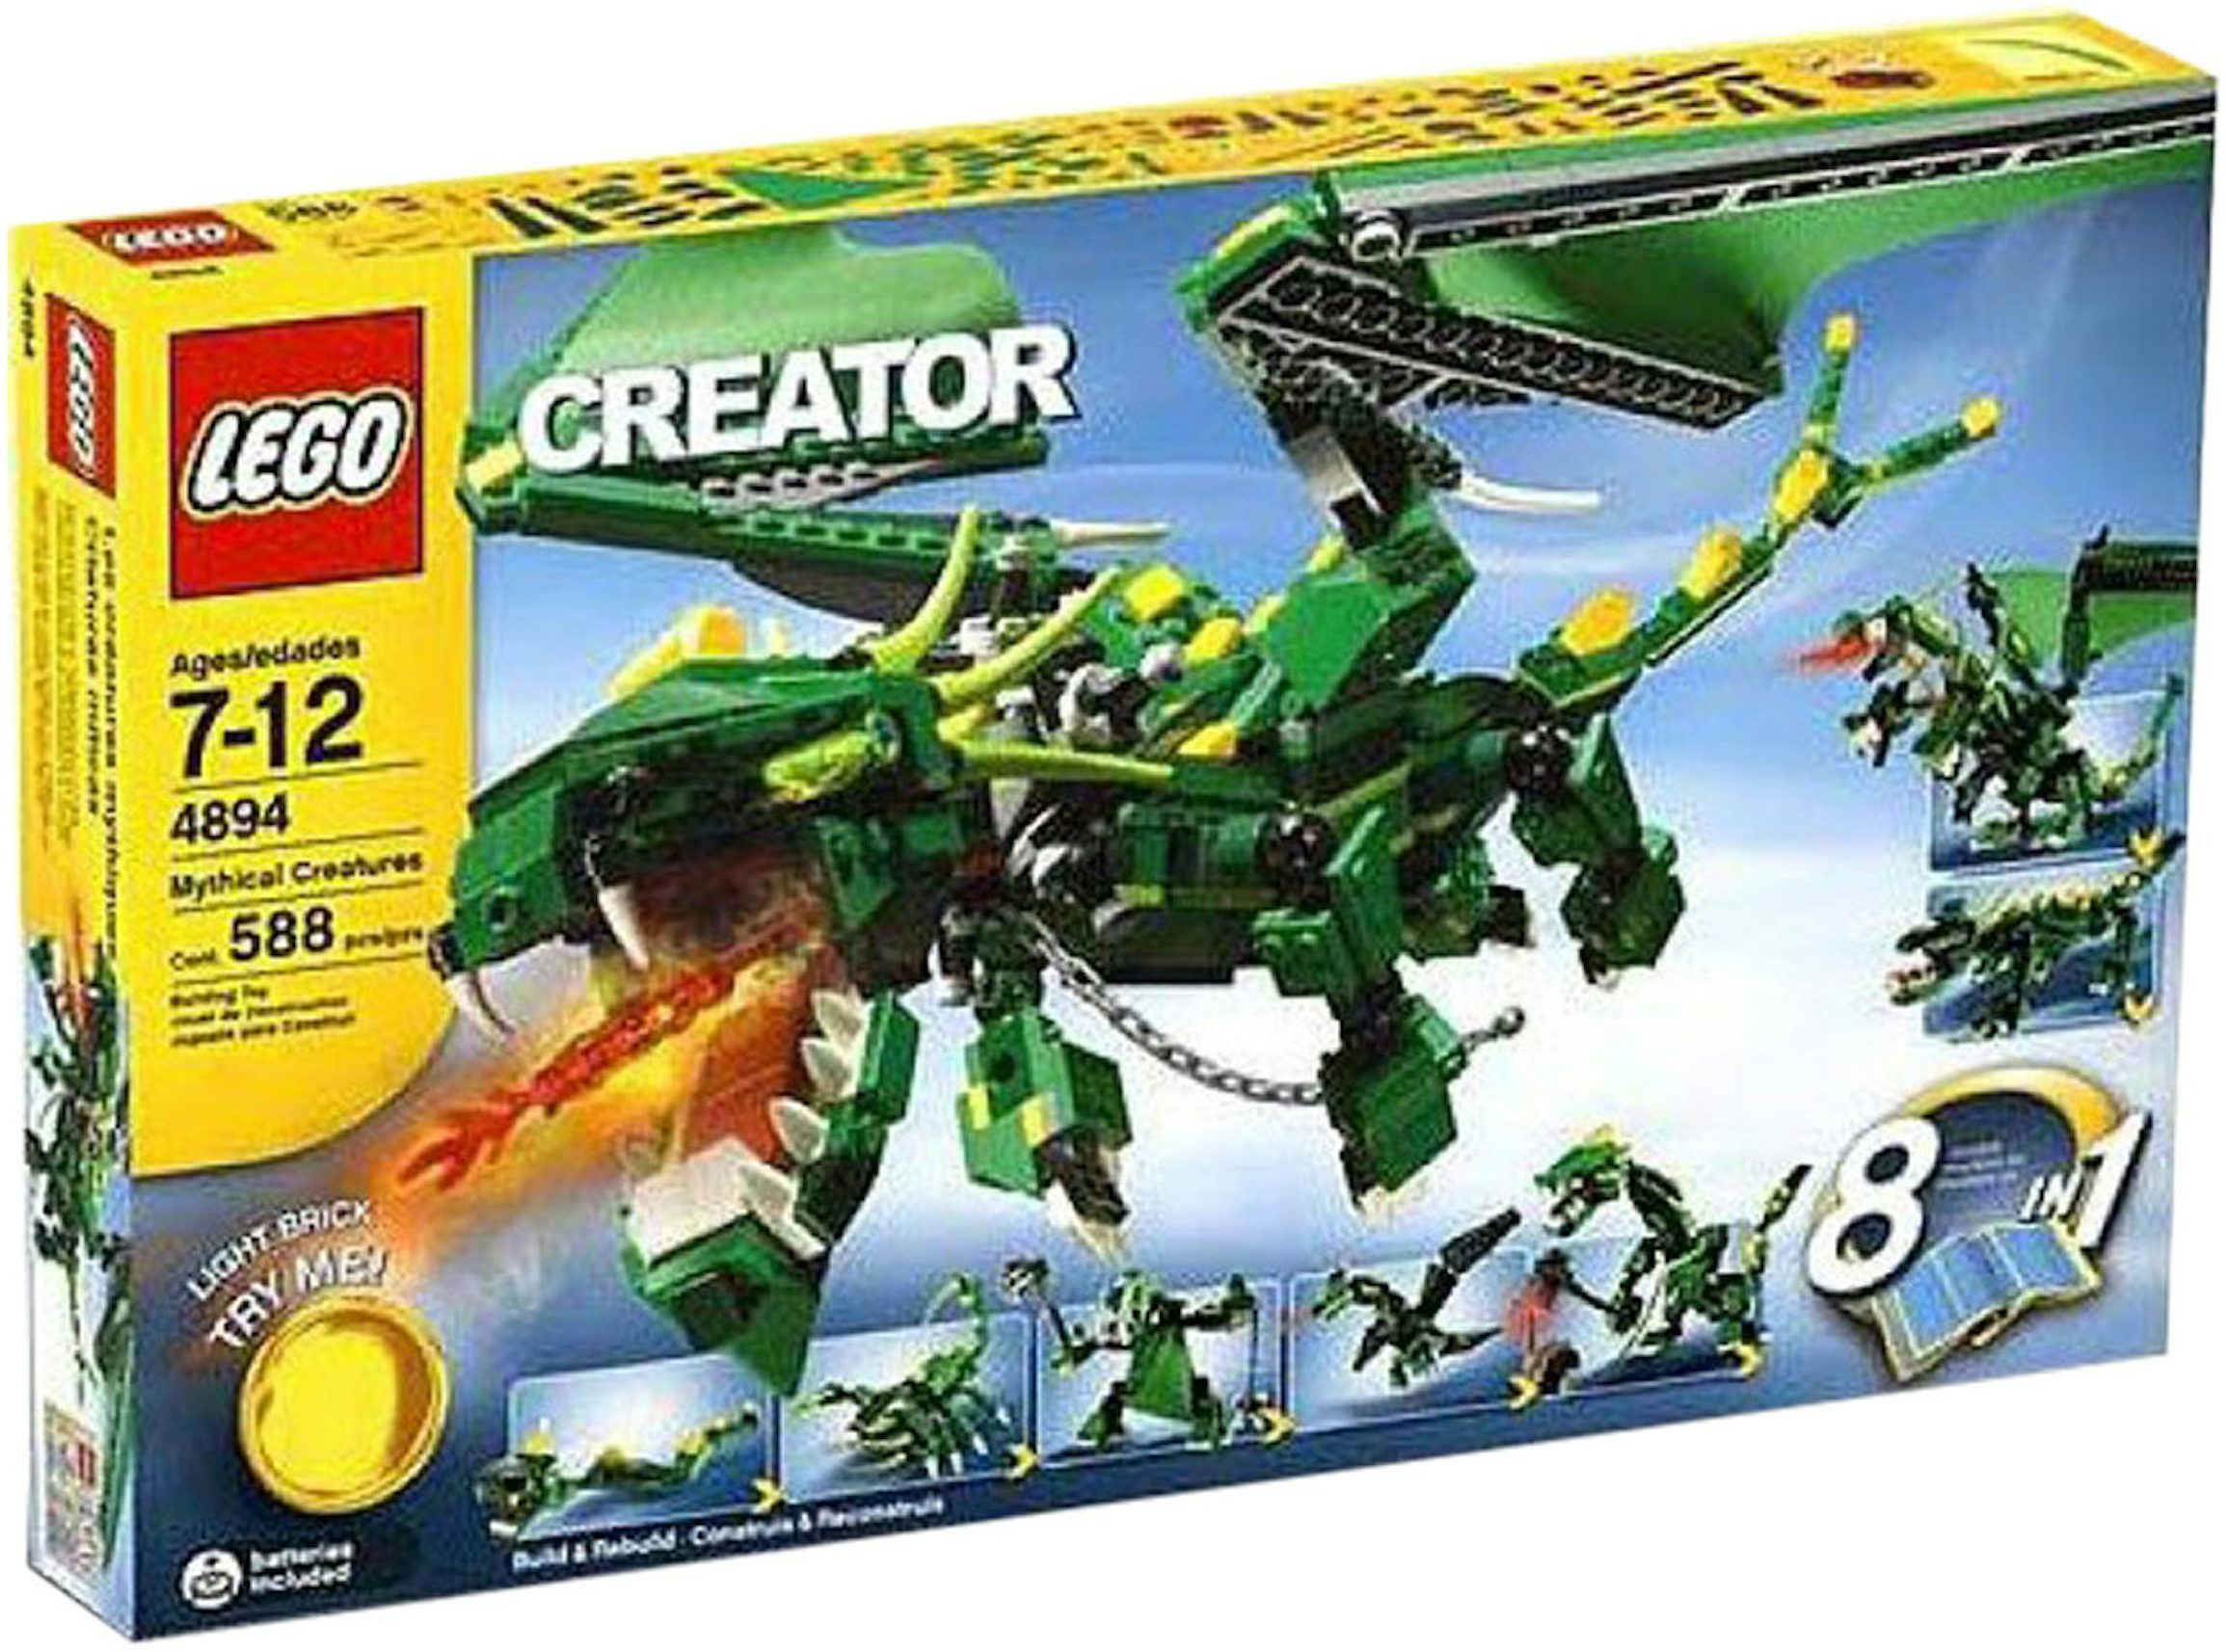 LEGO Creator Mythical Creatures Set 4894 - GB